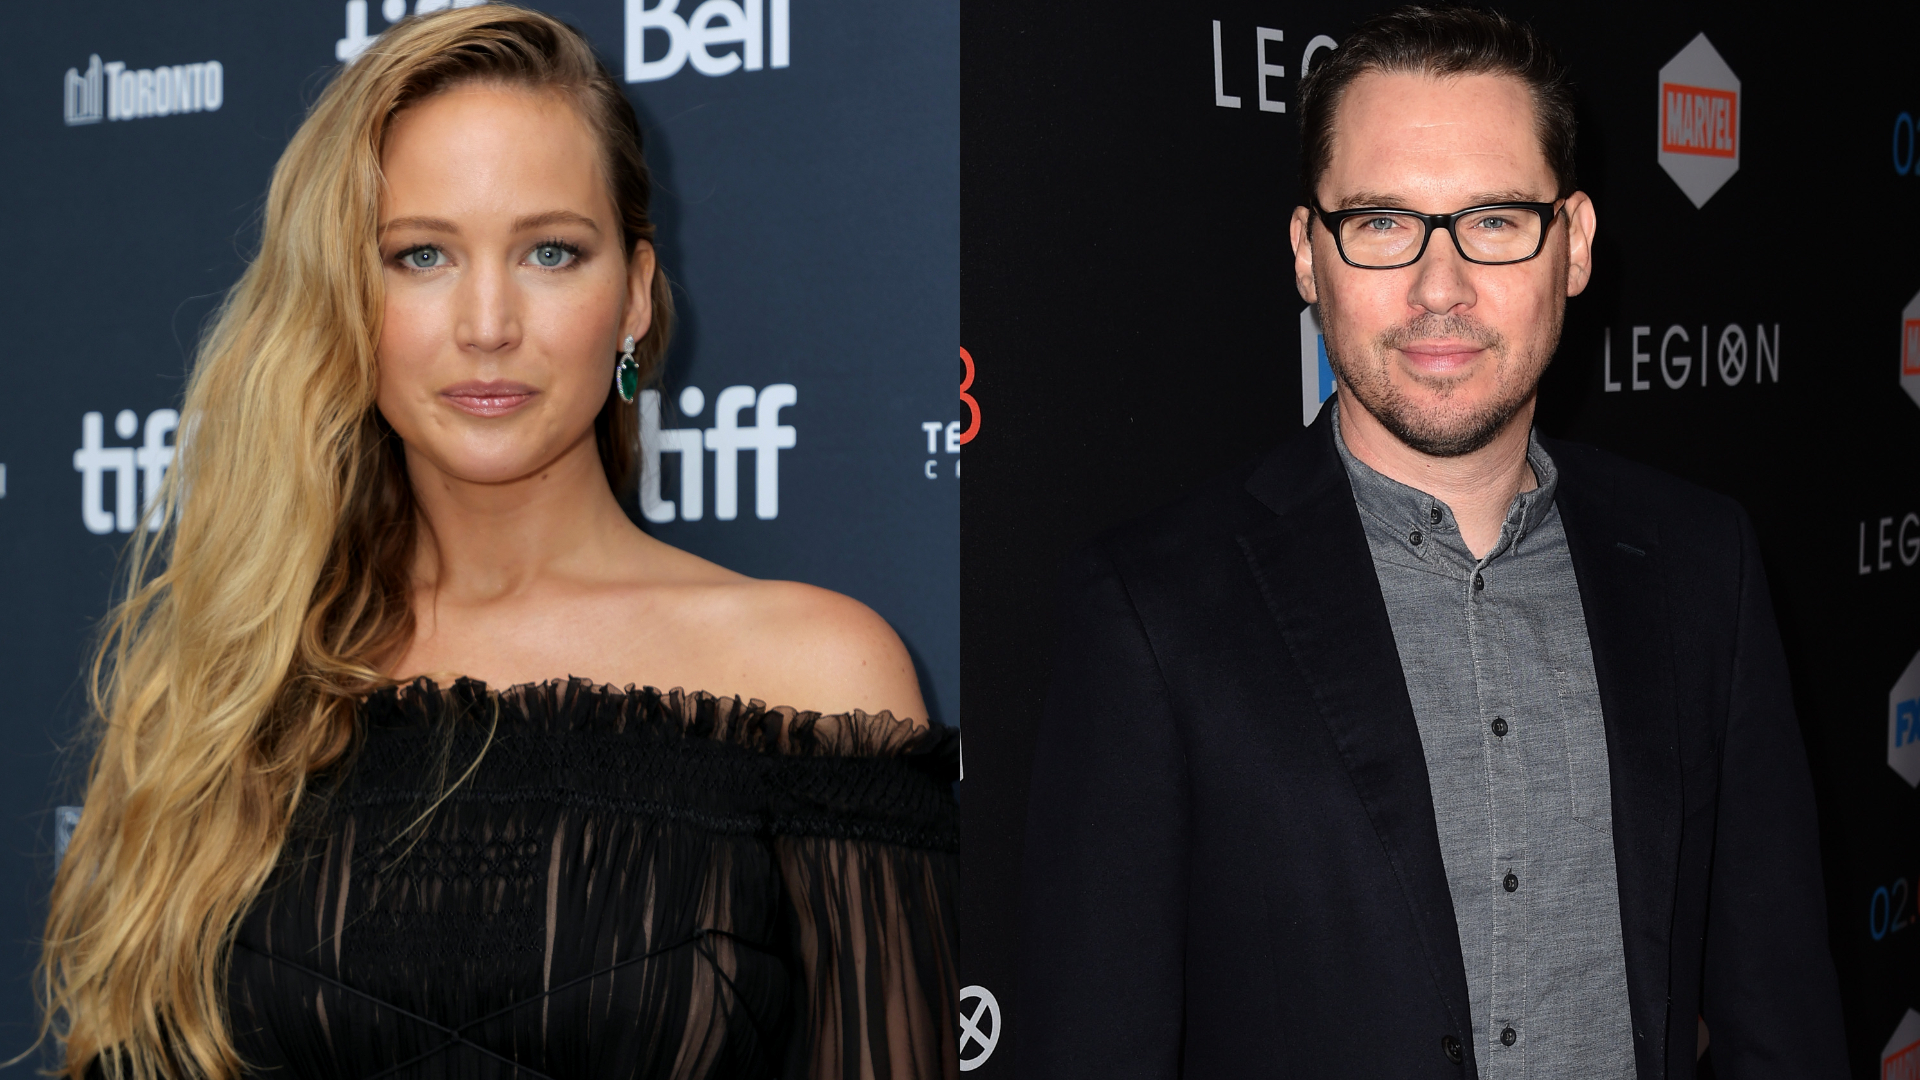 Jennifer Lawrence relembra experiência conturbada com diretor de “X-Men”: “Maiores chiliques”; assista